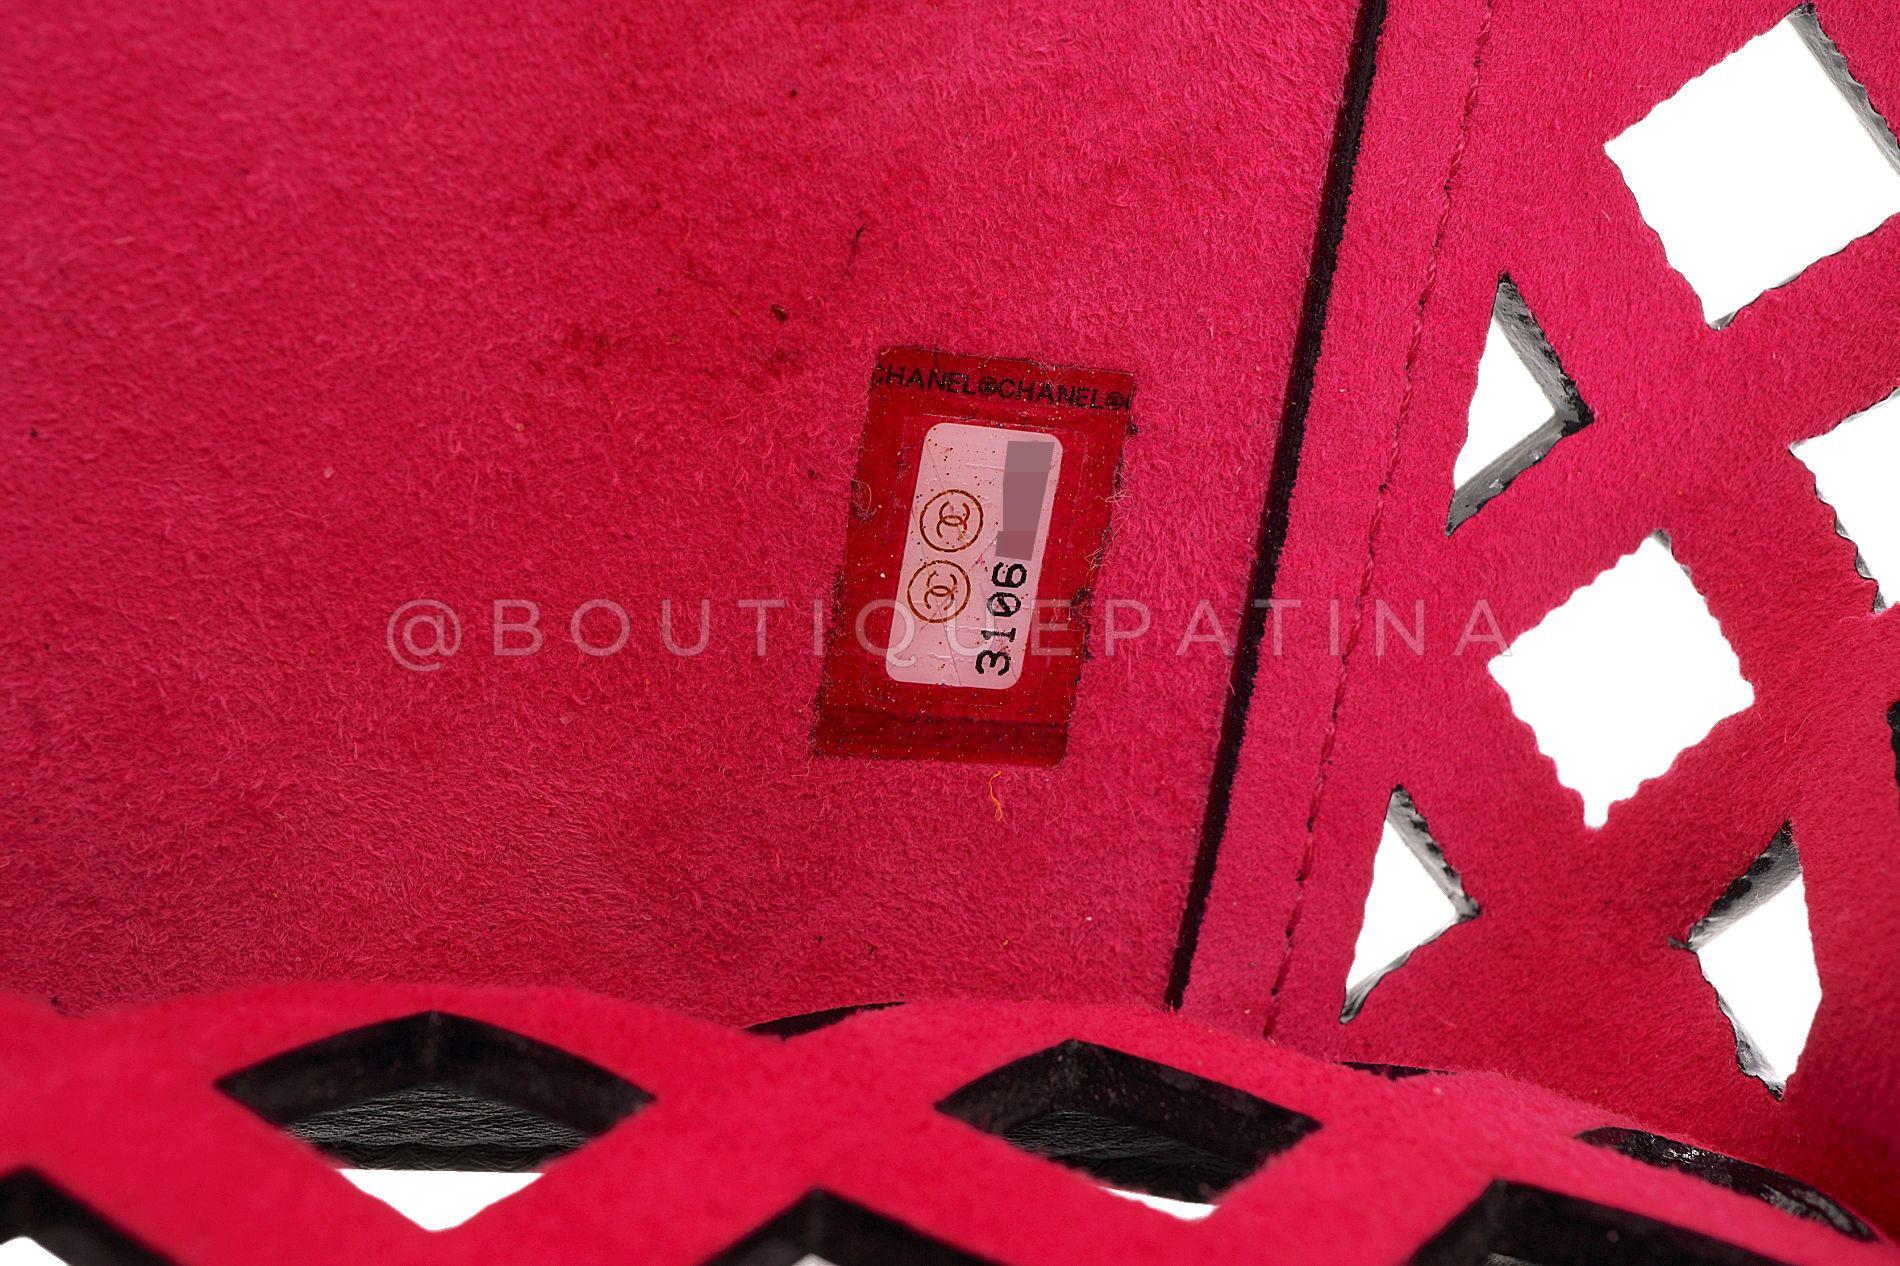 Chanel Black Fuchsia Pink Diamond Cutout Shopper Tote Bag 67861 For Sale 12